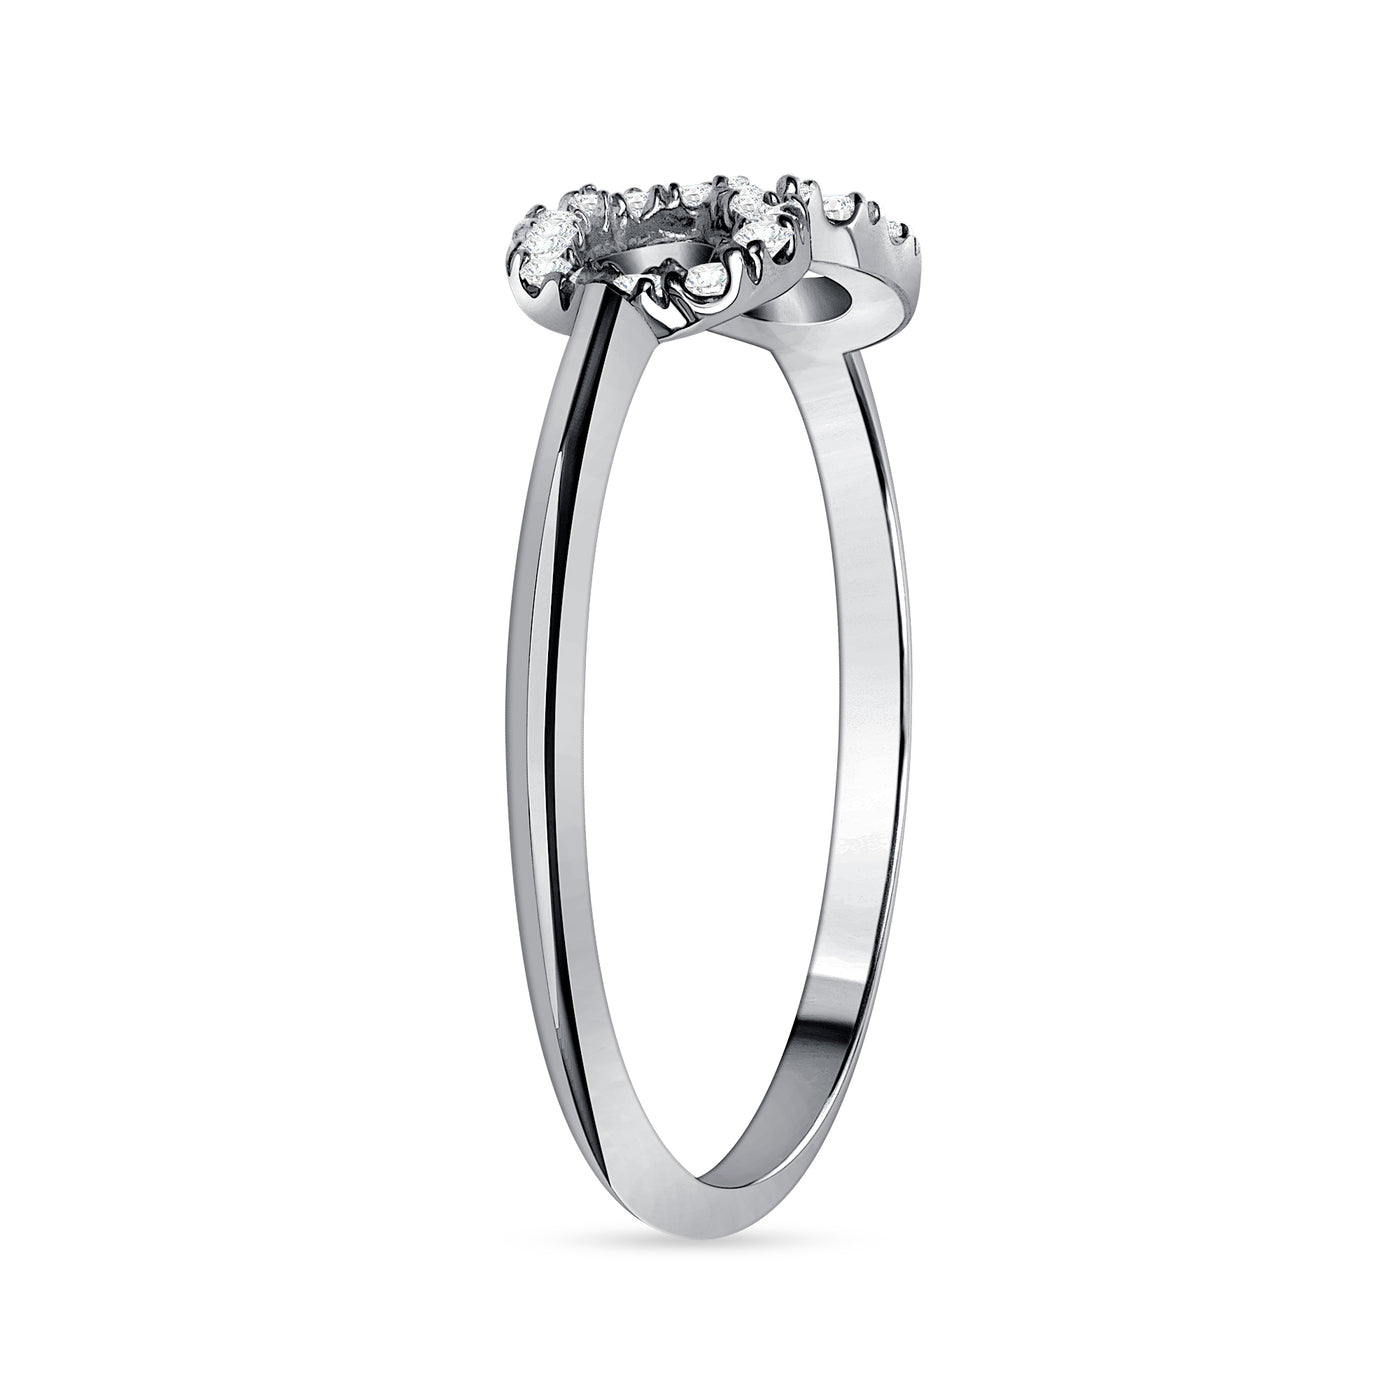 Infinity Symbol 0.17 Carat Round Cut Natural Diamond Ring